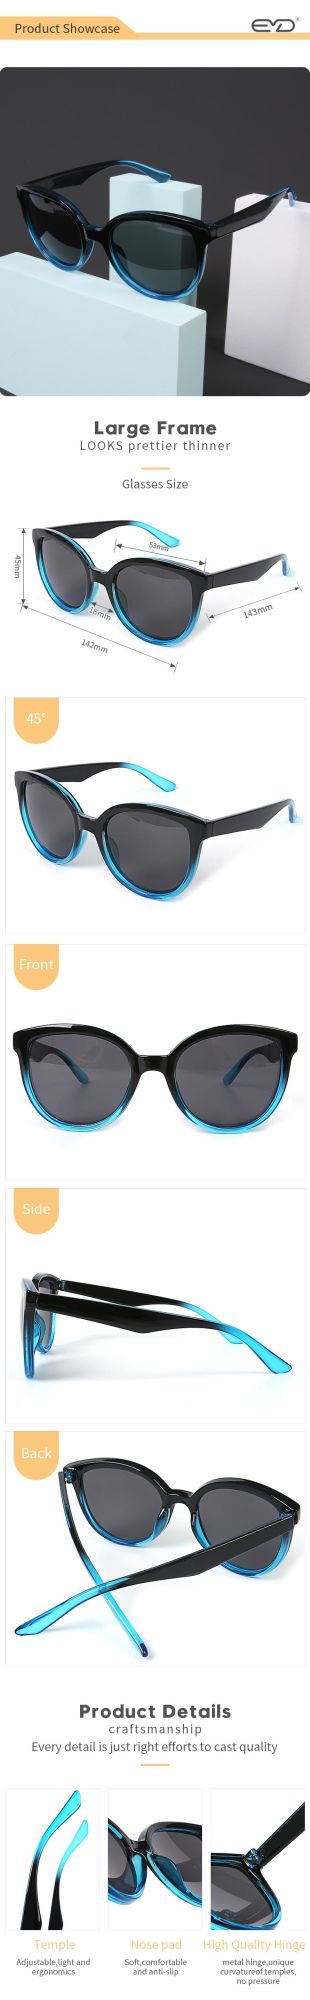 Custom Bright Black Sunglasses Black and Blue Sun Glasses Manufacturer Fashion Sunglasses